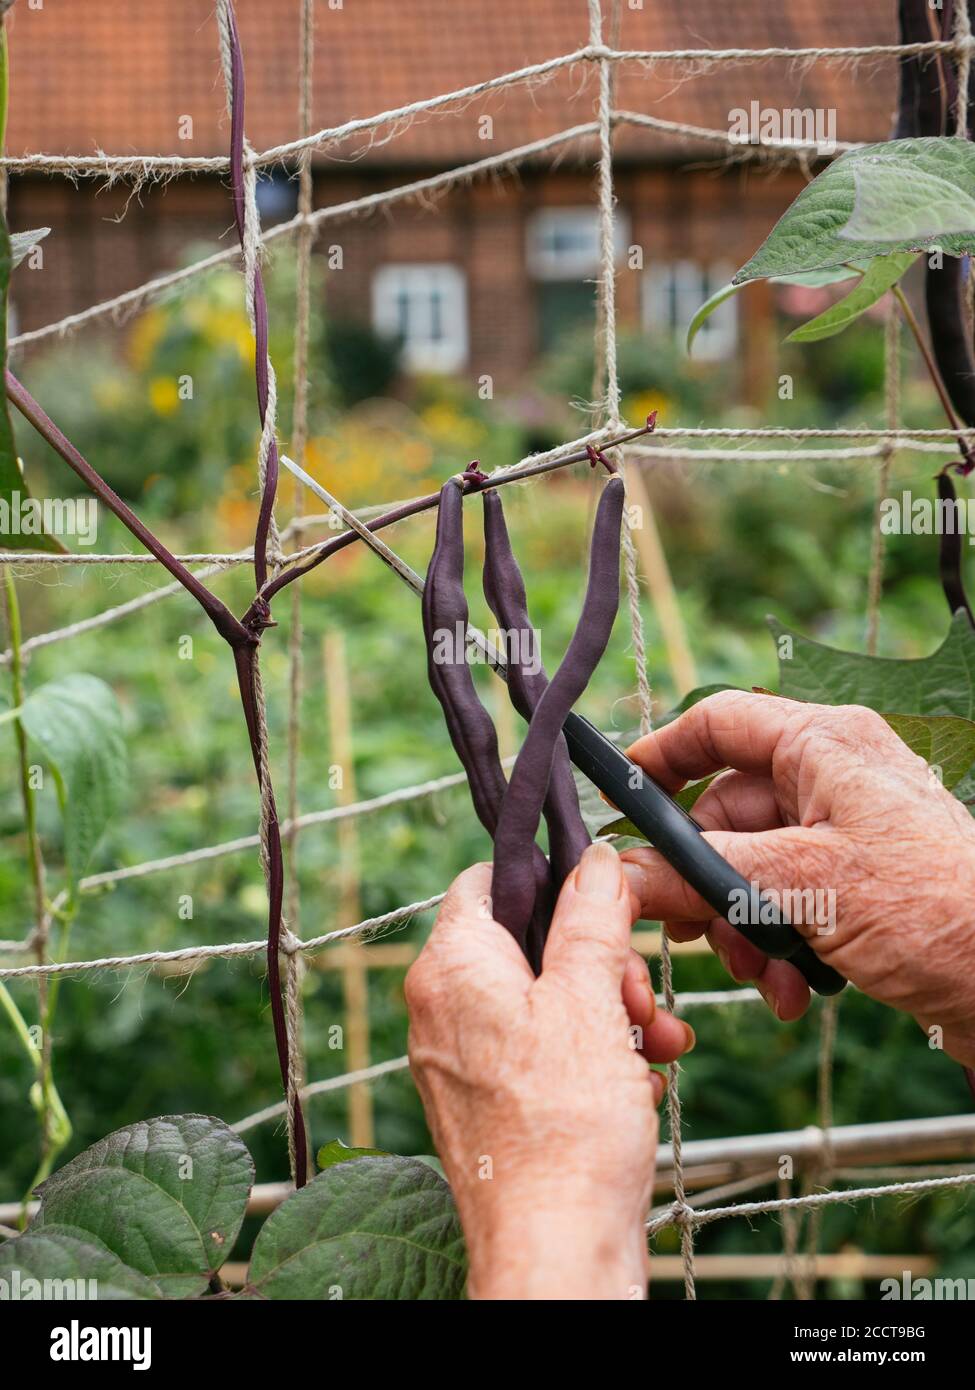 Gardener harvesting purple beans growing on a trellis. Stock Photo